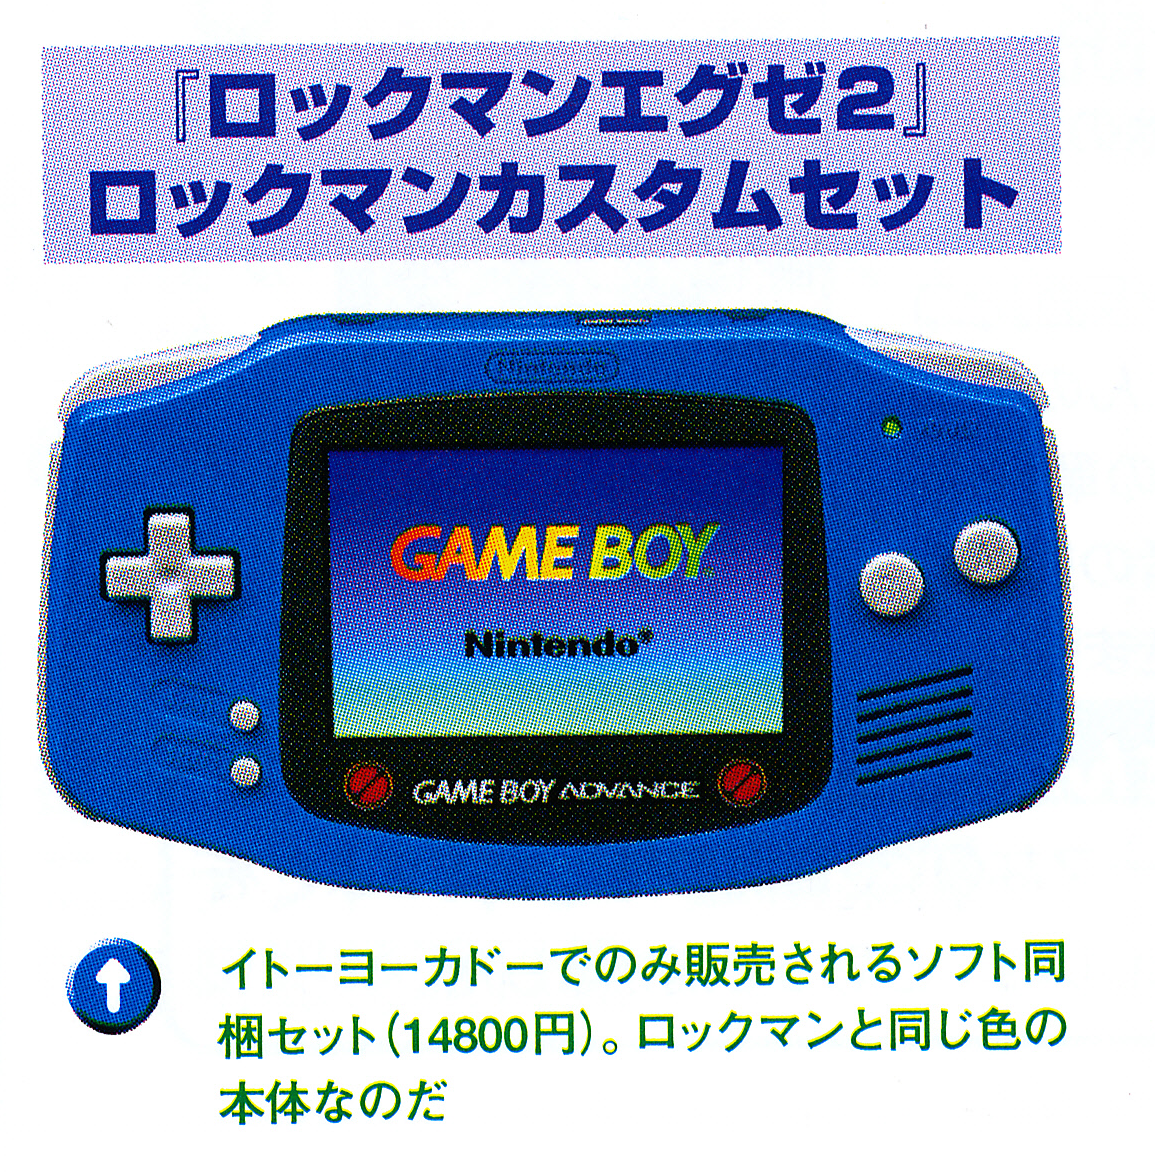 Nintendo Game Boy Advance Rockman Console